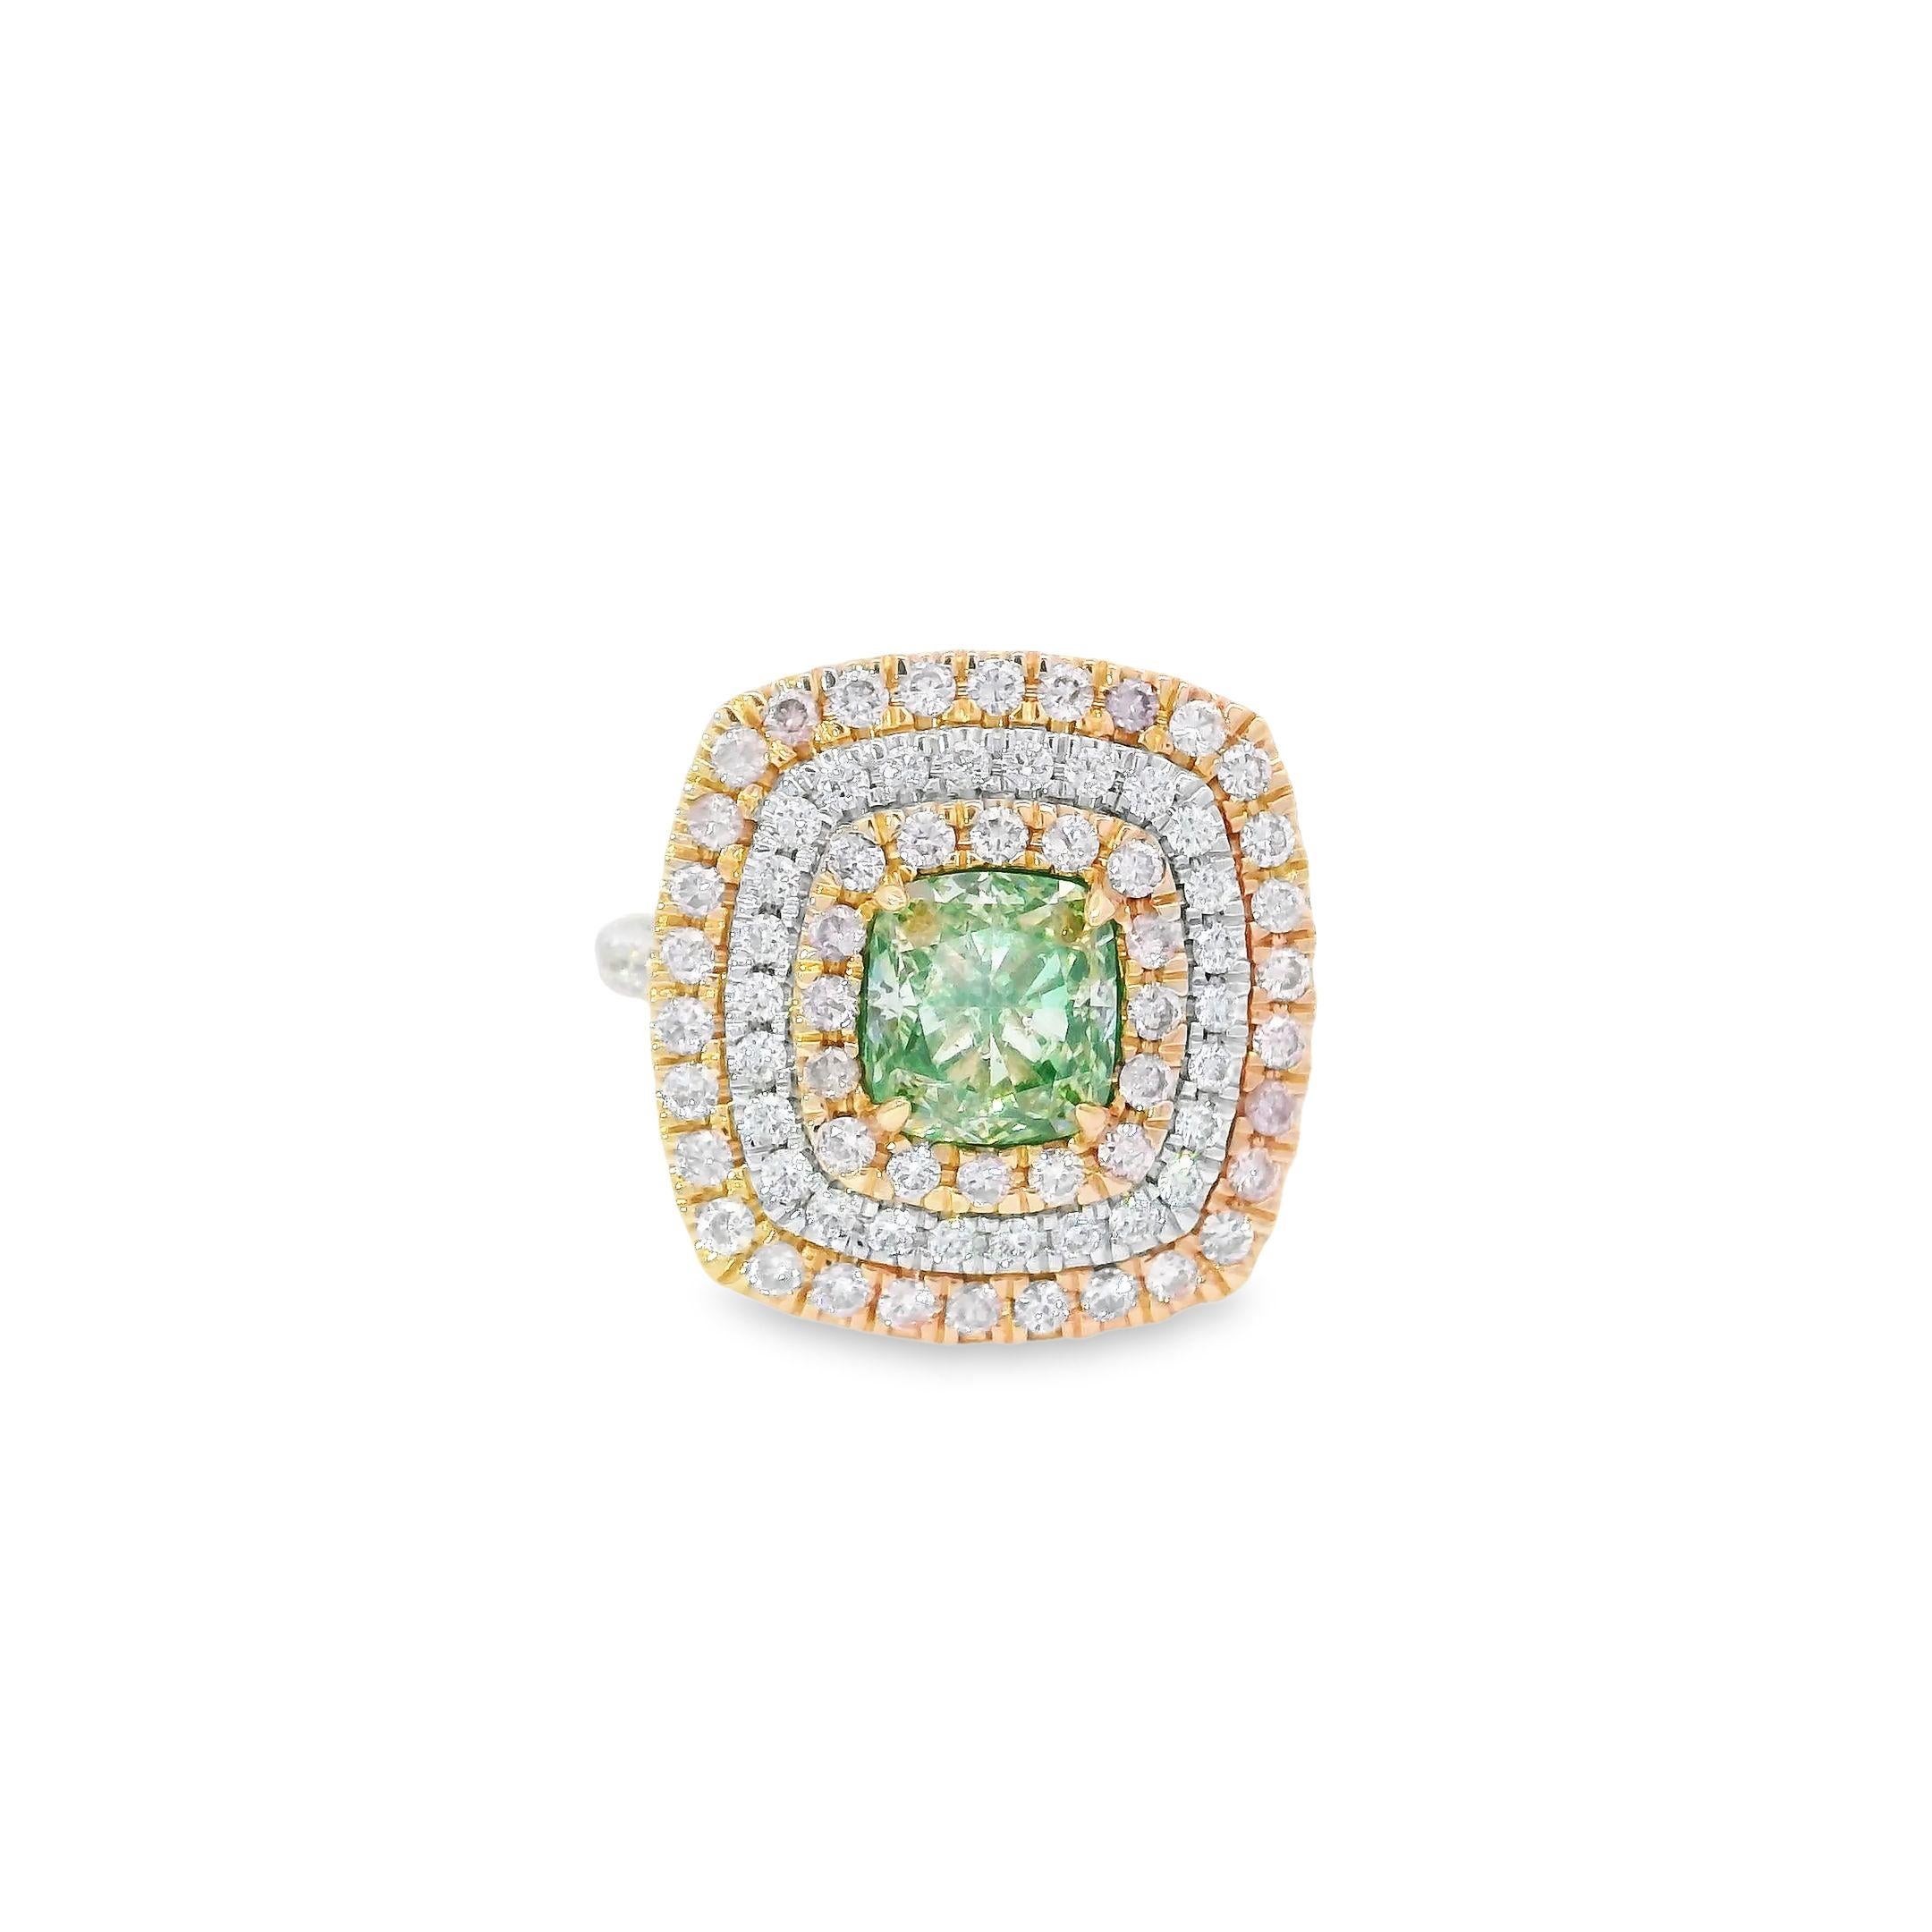 Cushion Cut 1.51 Carat Fancy Green Diamond Ring VS Clarity AGL Certified For Sale